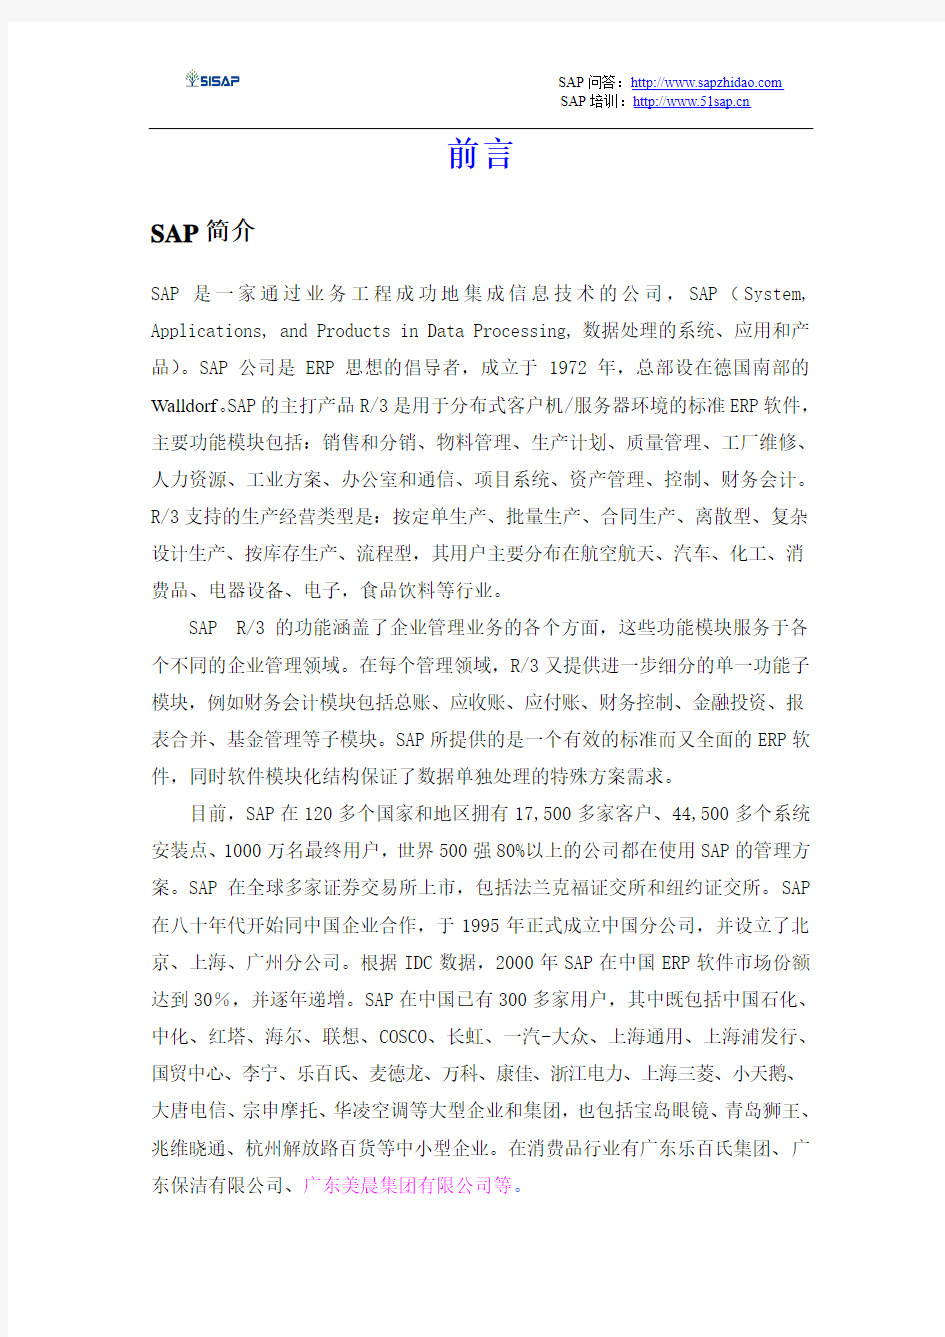 sap全面概述中文90页v2.22